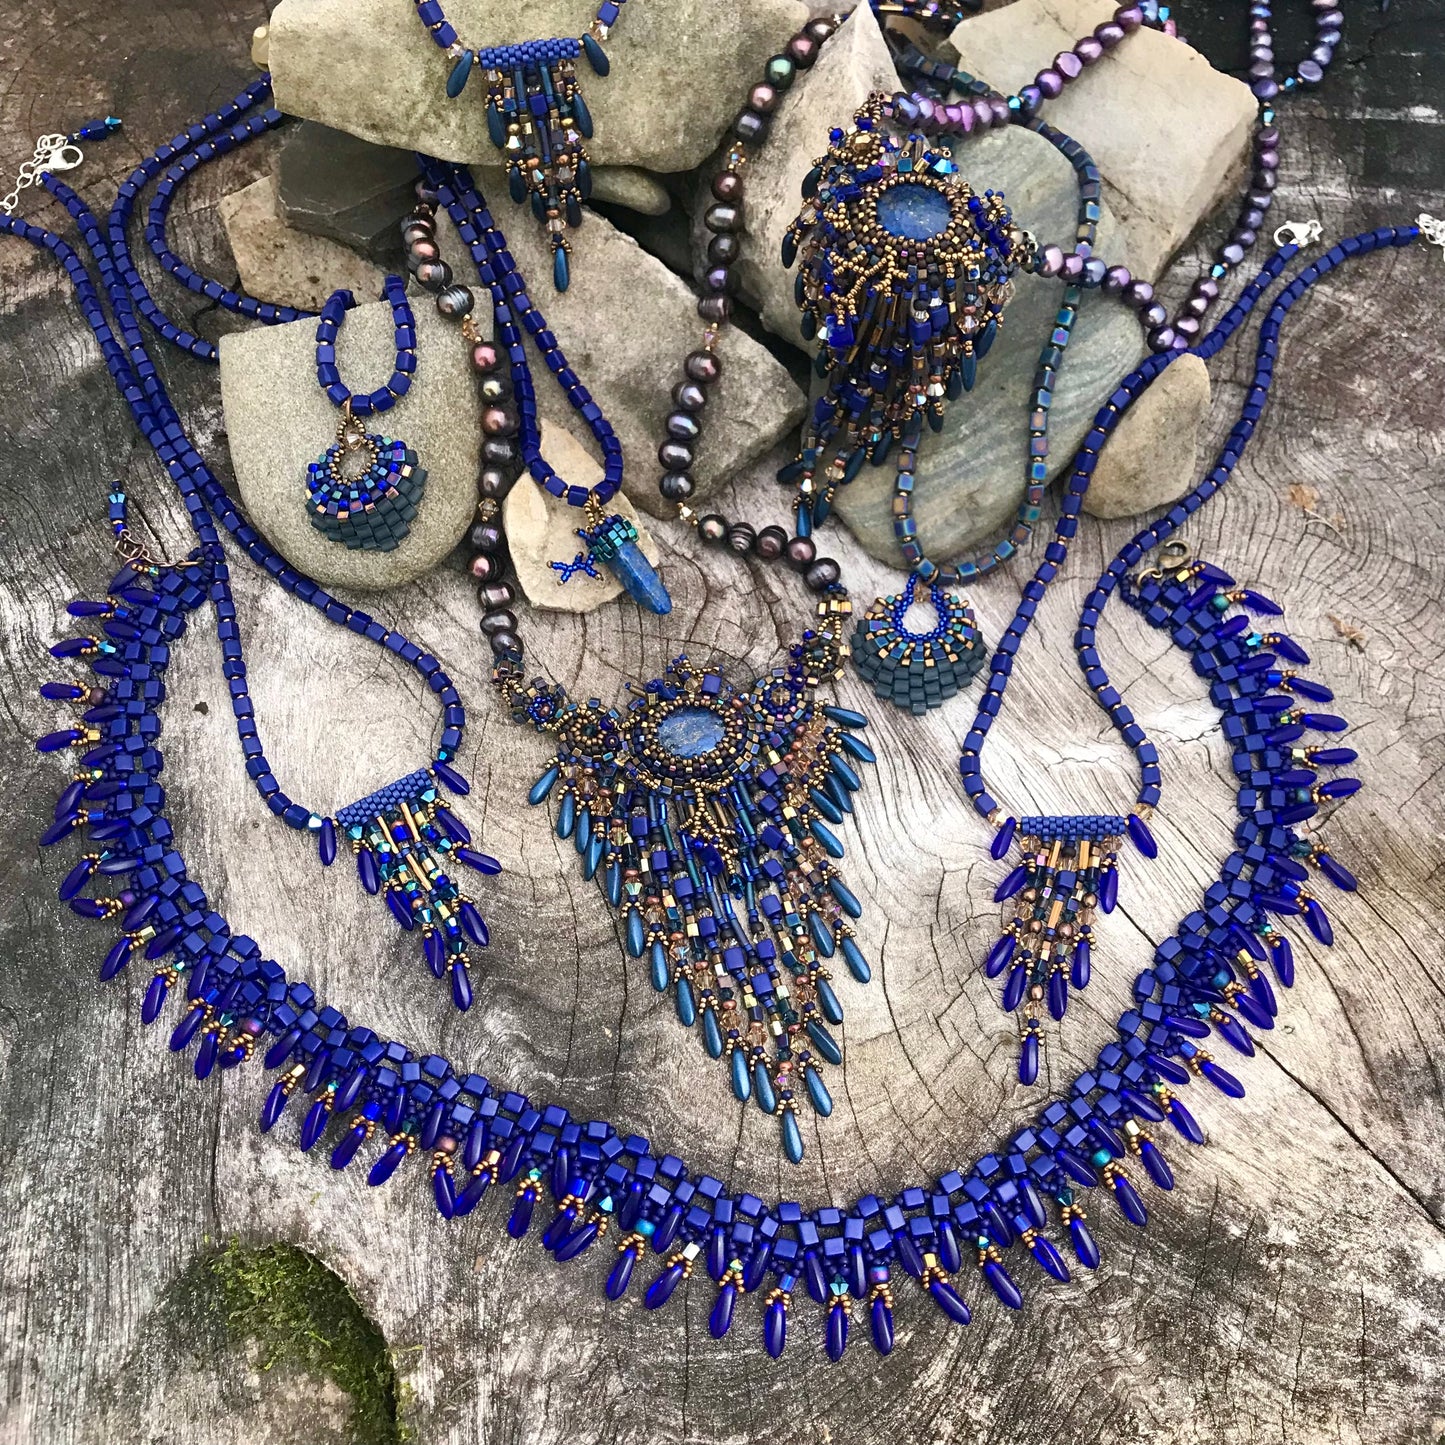 Cobalt Blue with Topaz Crystal Fringy Necklace - 7 strands